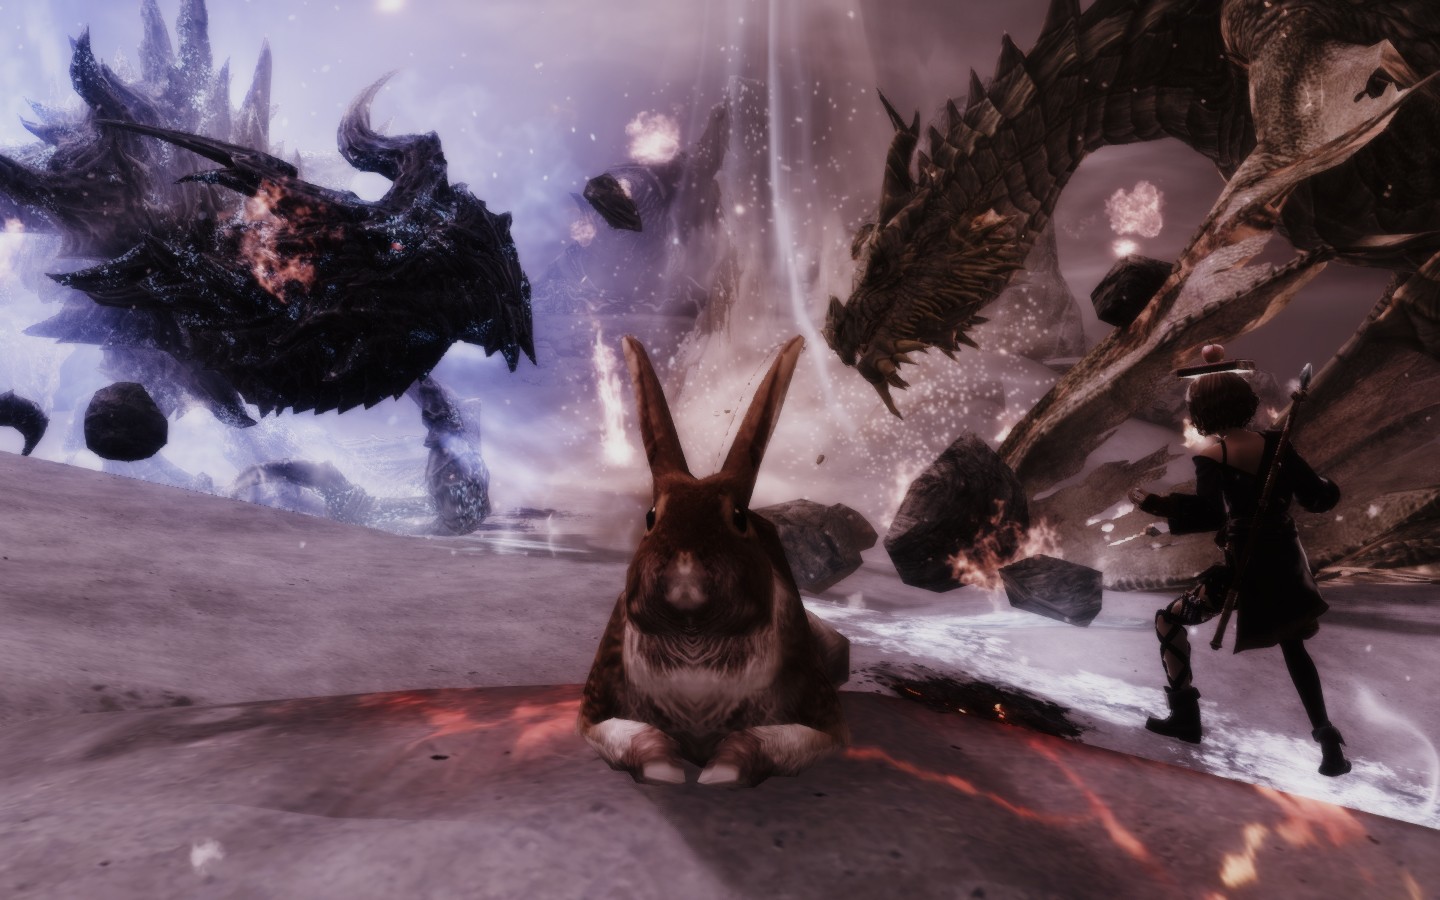 General 1440x900 The Elder Scrolls V: Skyrim dragon rabbits magic RPG video games PC gaming